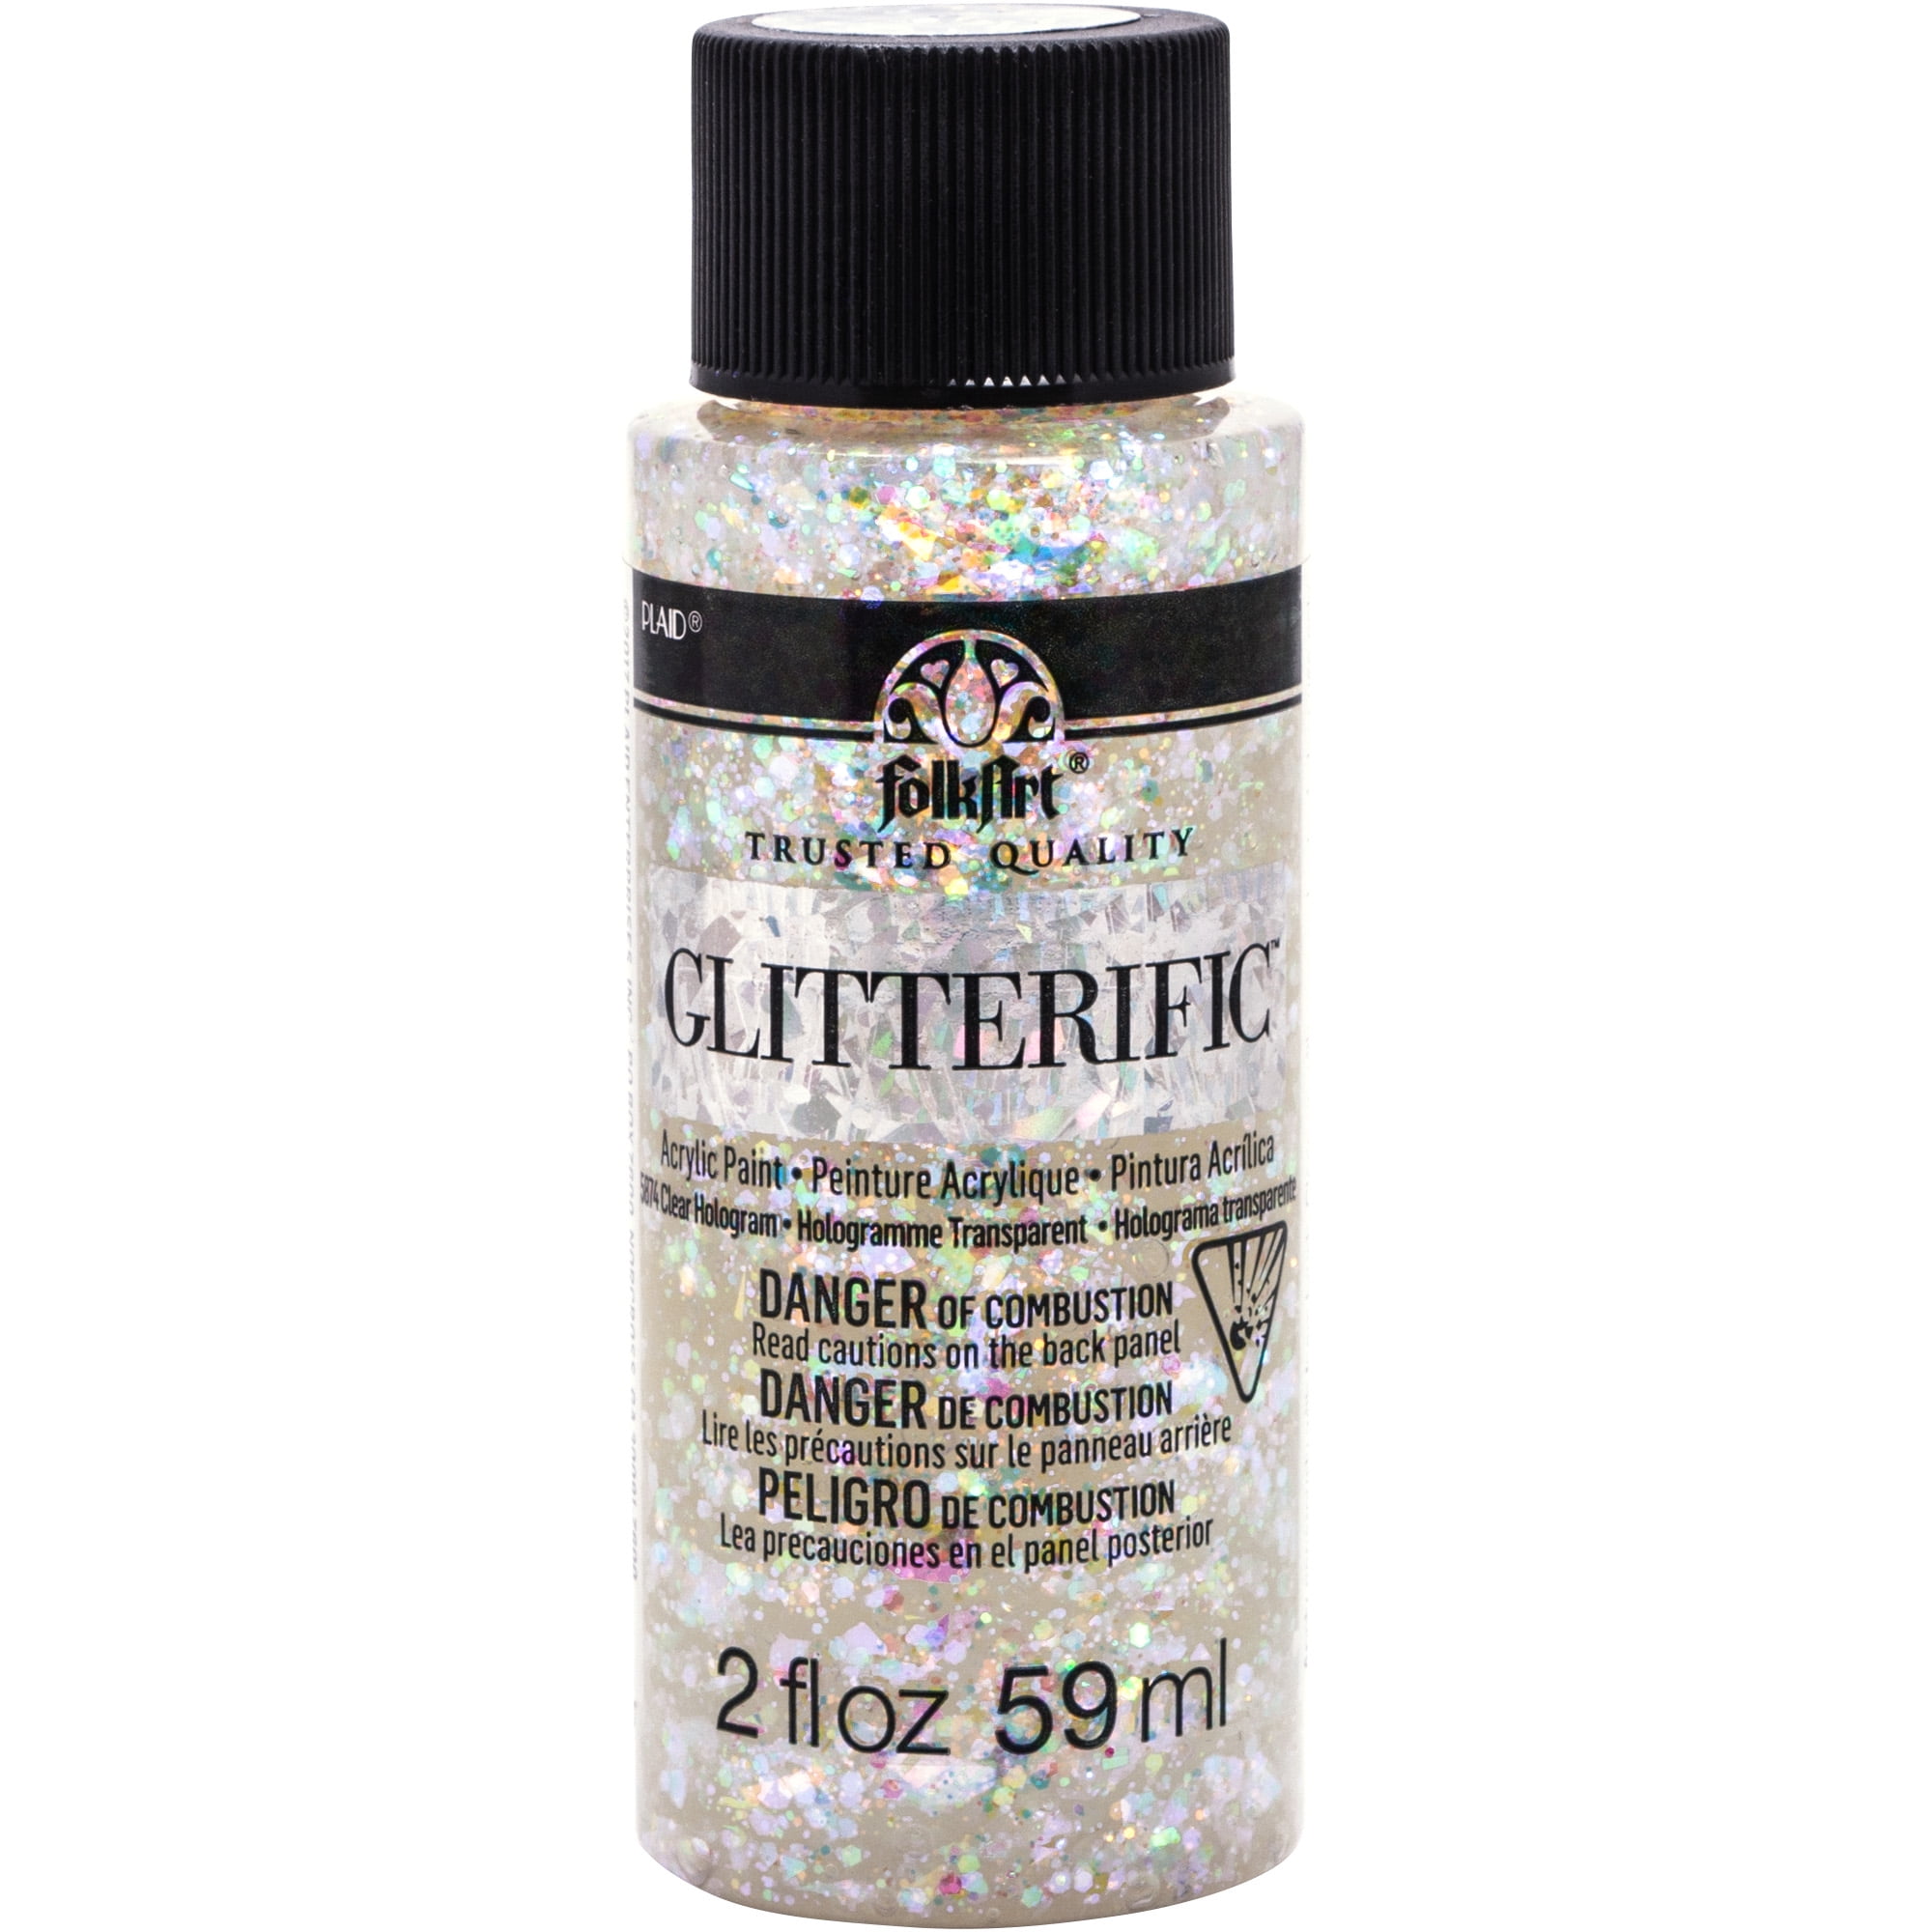  FolkArt Glitterific Unicorn Glitter Paint Set, 2 oz, Enchanted  Colors